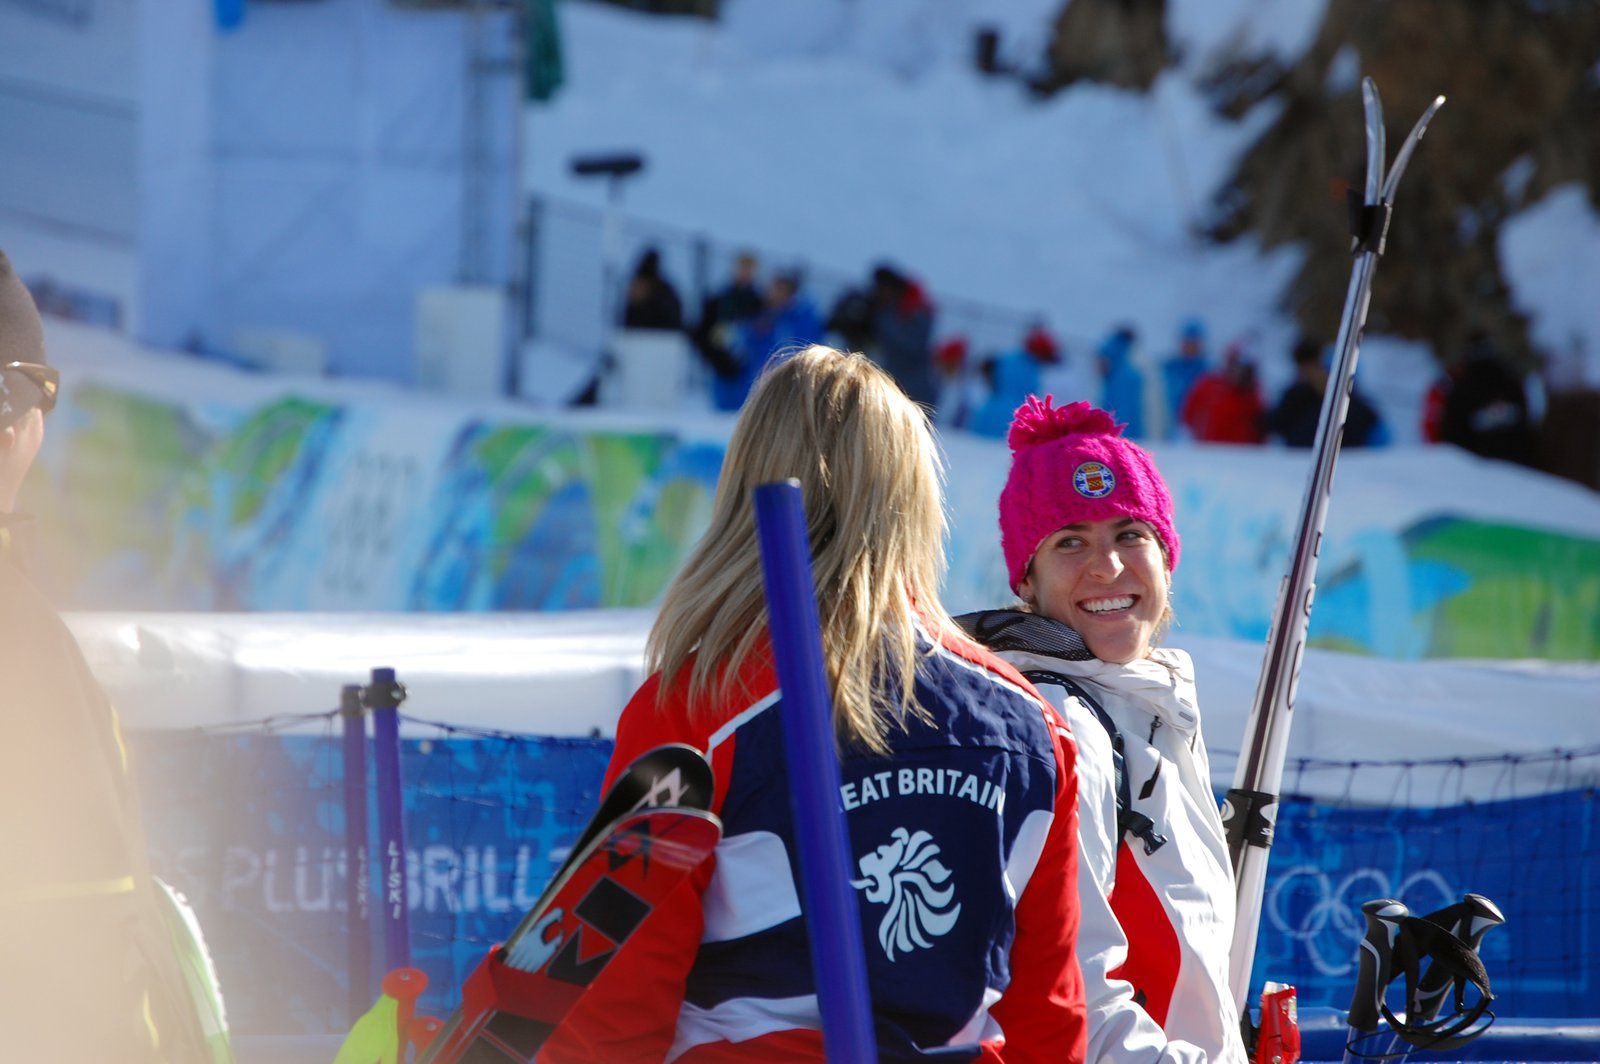 Women's downhill british skier congratulating fellow racer